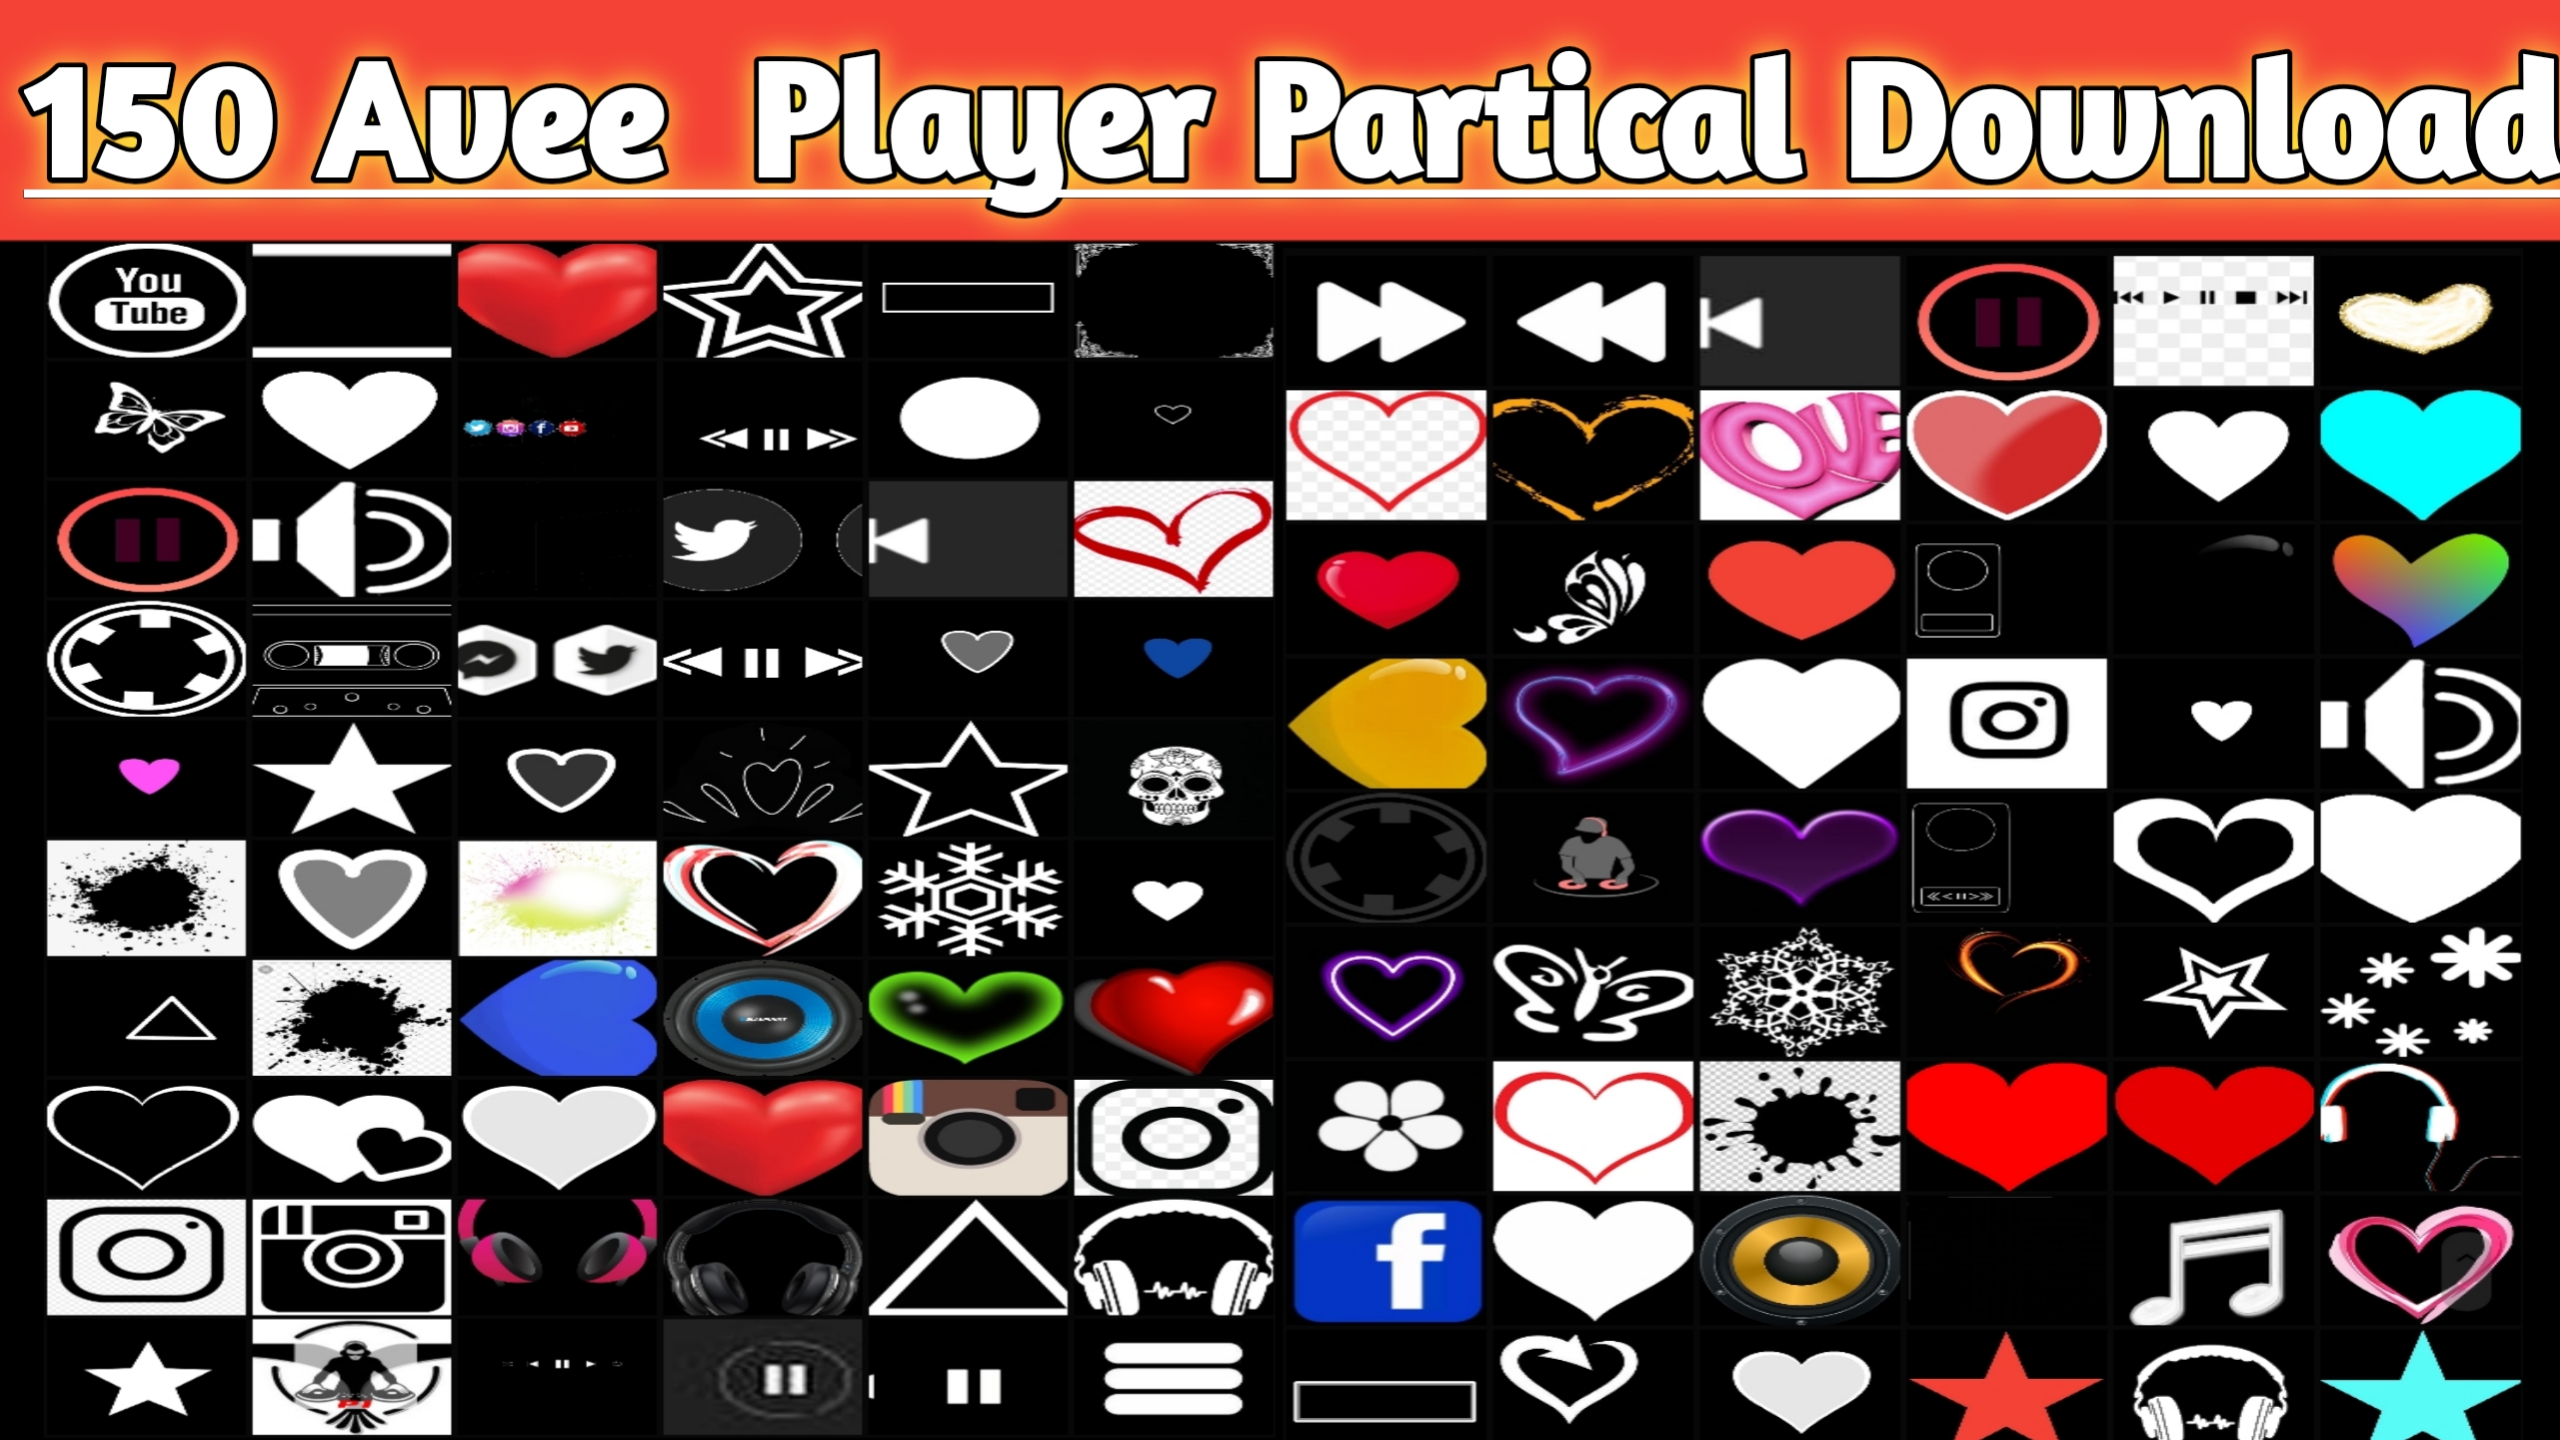 150 Avee Player Particles BY Dj Devrajkasya